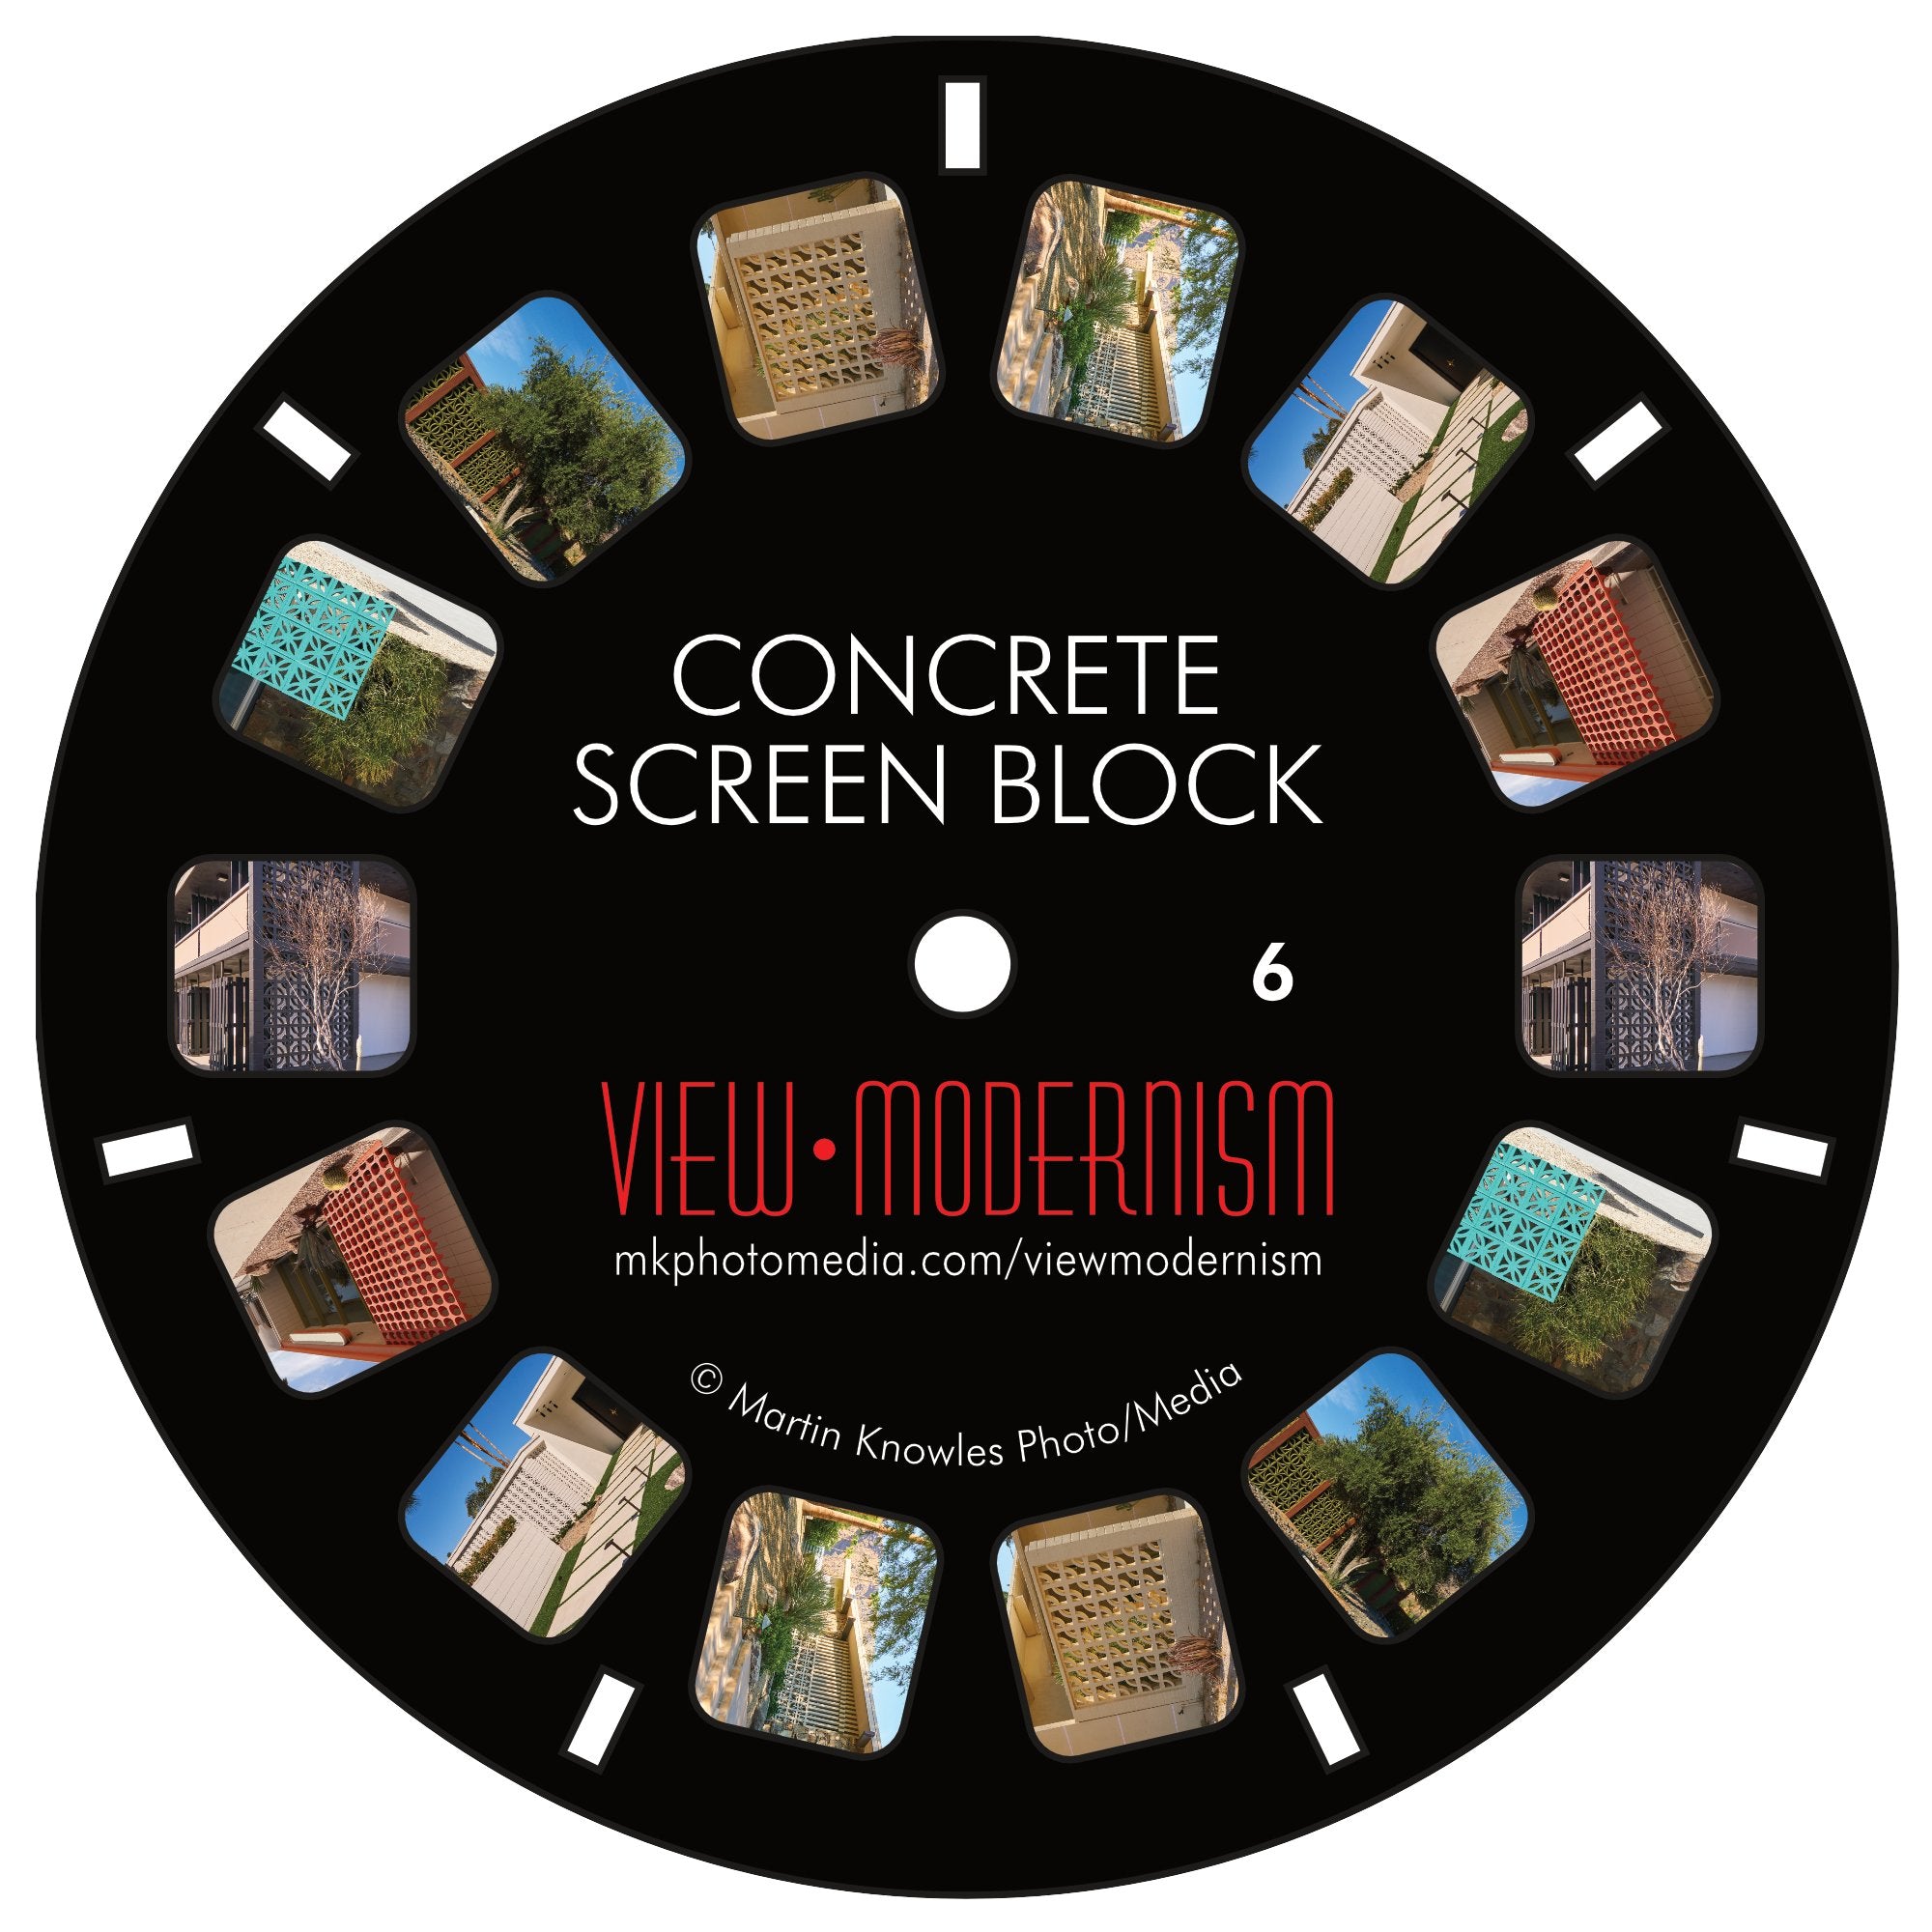 View Modernism Stereoscopic Reel - Concrete Screen Block - Destination PSP